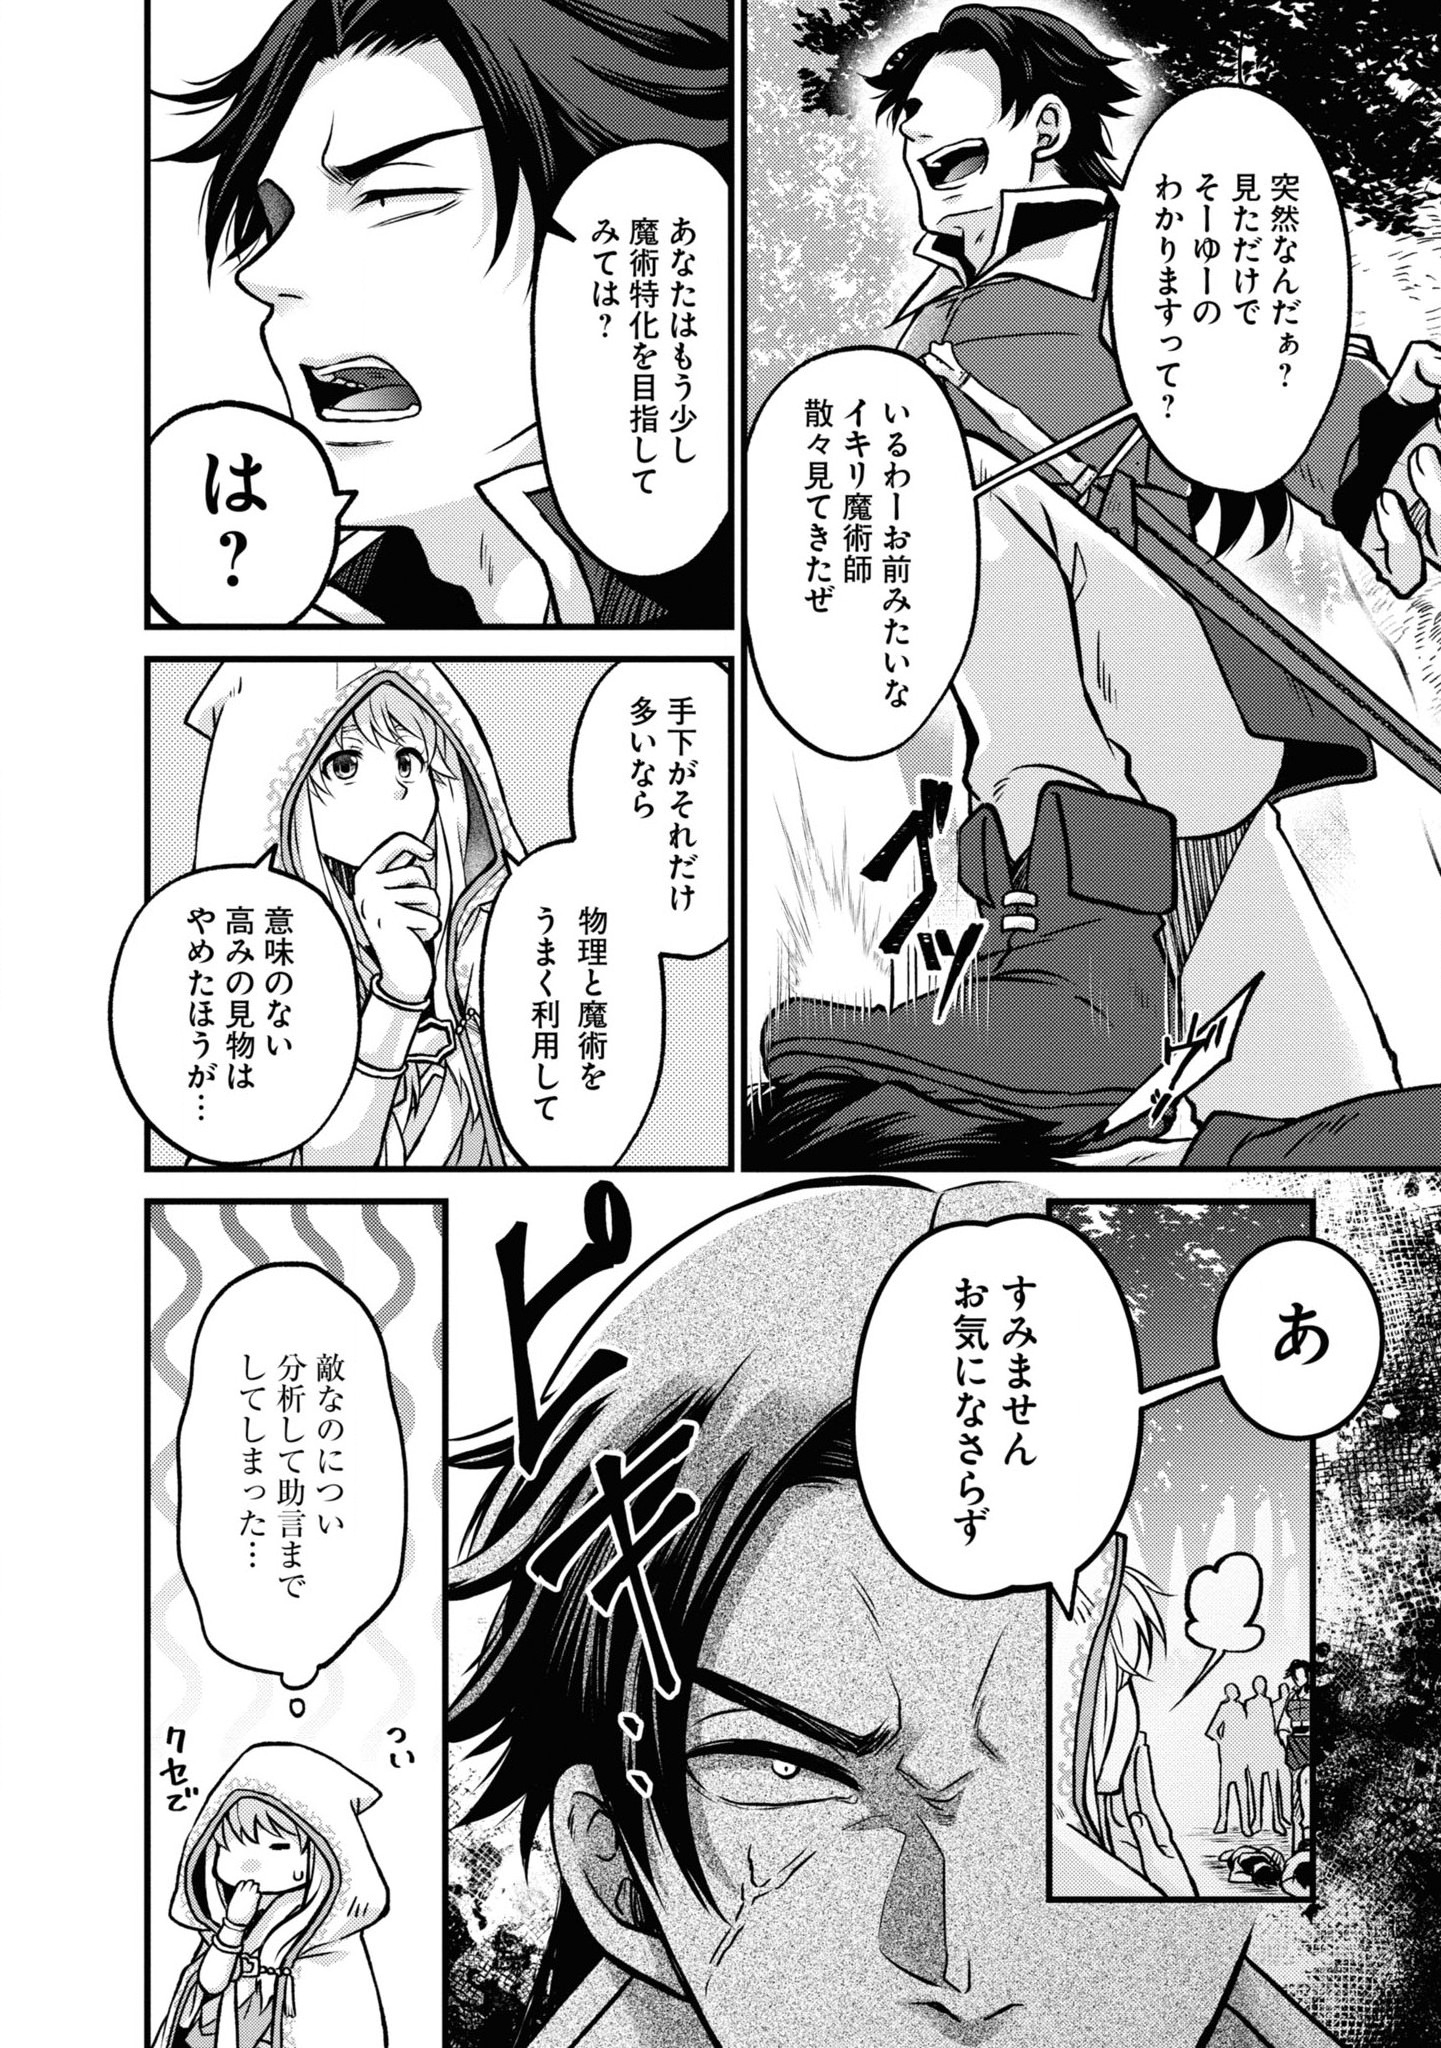 Akuu no Seijo - Chapter 3 - Page 18